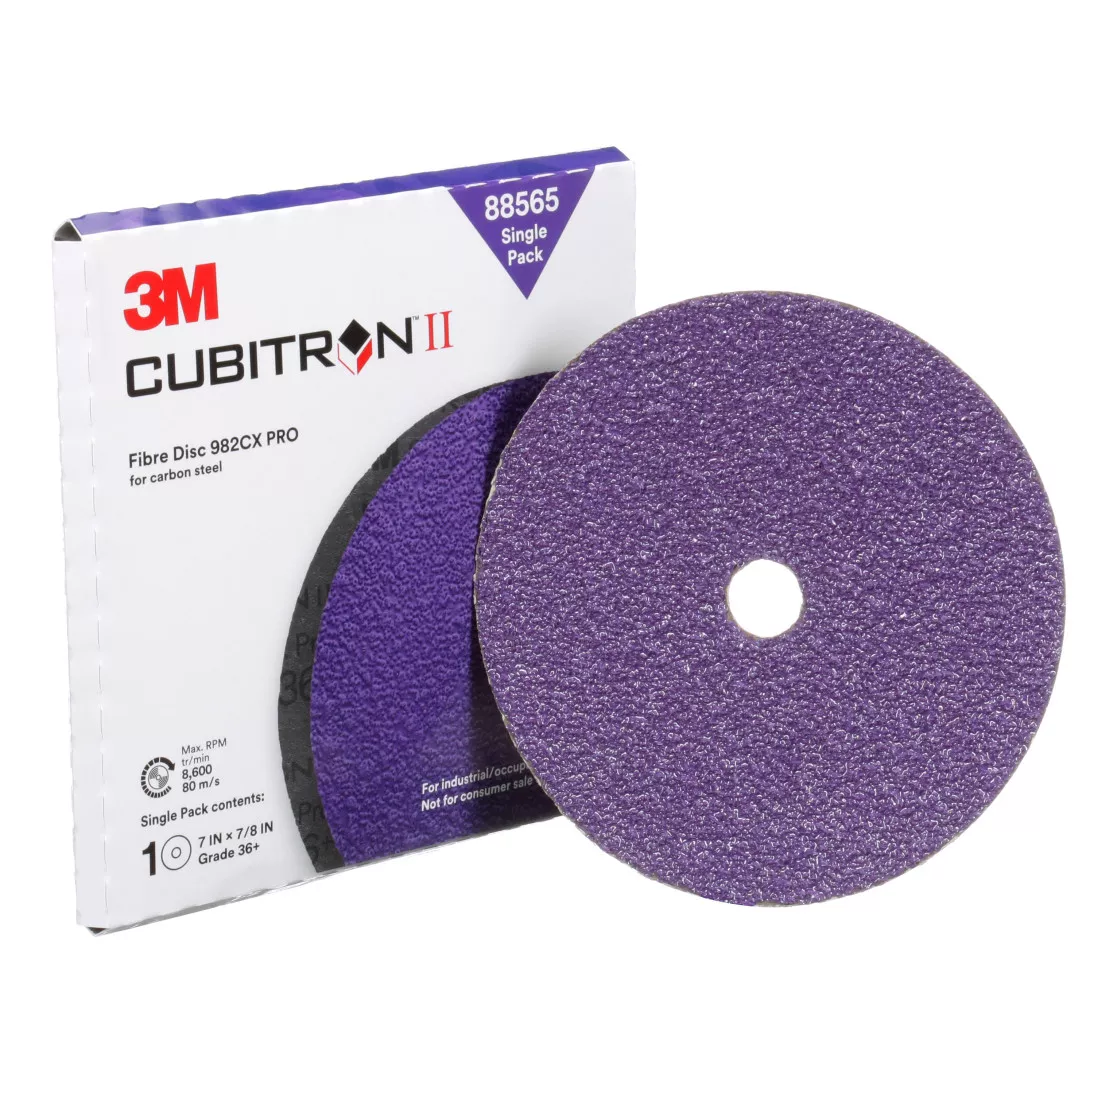 3M™ Cubitron™ II Fibre Disc 982CX Pro, 36+, 4-1/2 in x 7/8 in, Die 450E,
Single Pack, 10 ea/Case